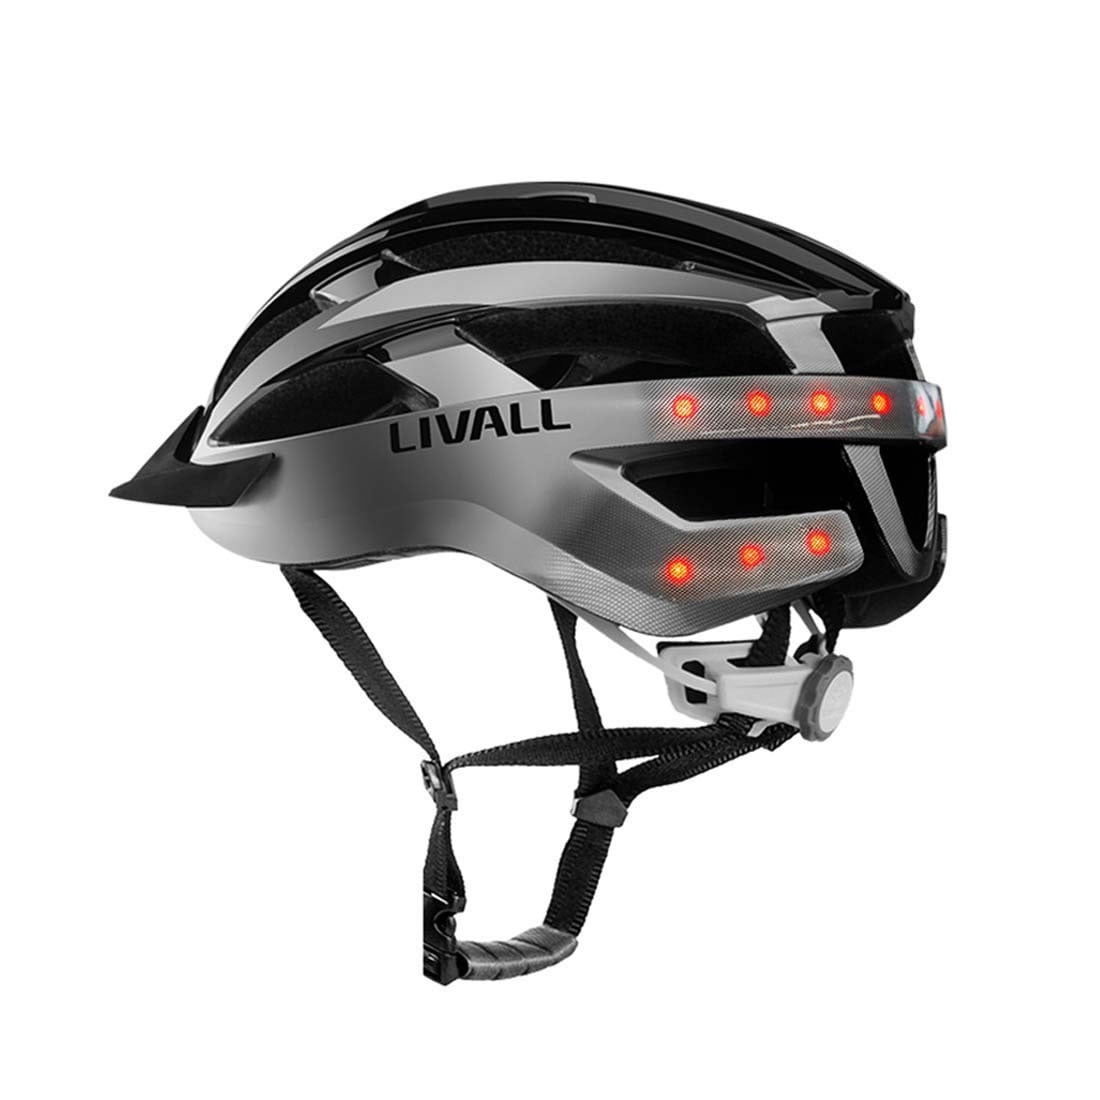 Livall MT1 L Size Helmet Bluetooth Cycling Bicycle Bike Motorcycle Helmet 